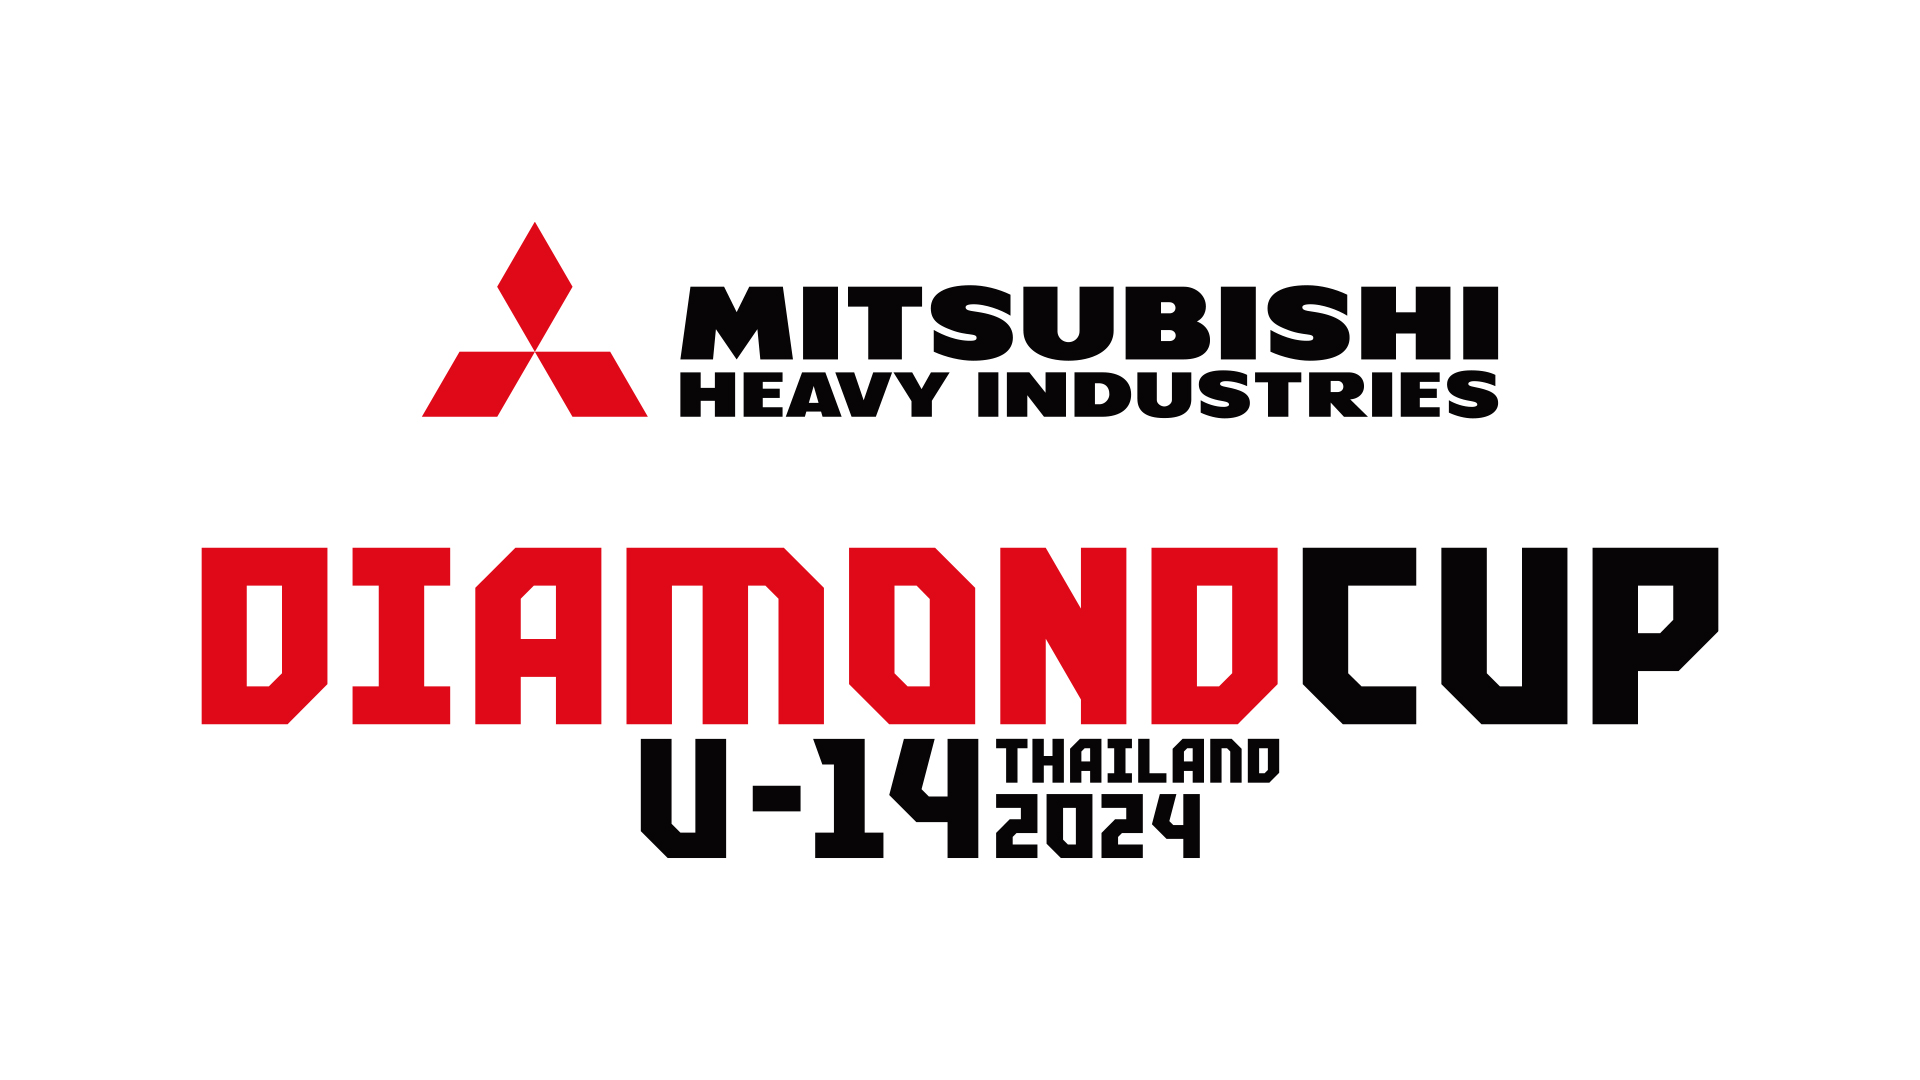 Urawa Reds Diamonds Junior Youth to participate in the Mitsubishi Heavy Industries Diamond Cup U-14 Thailand 2024